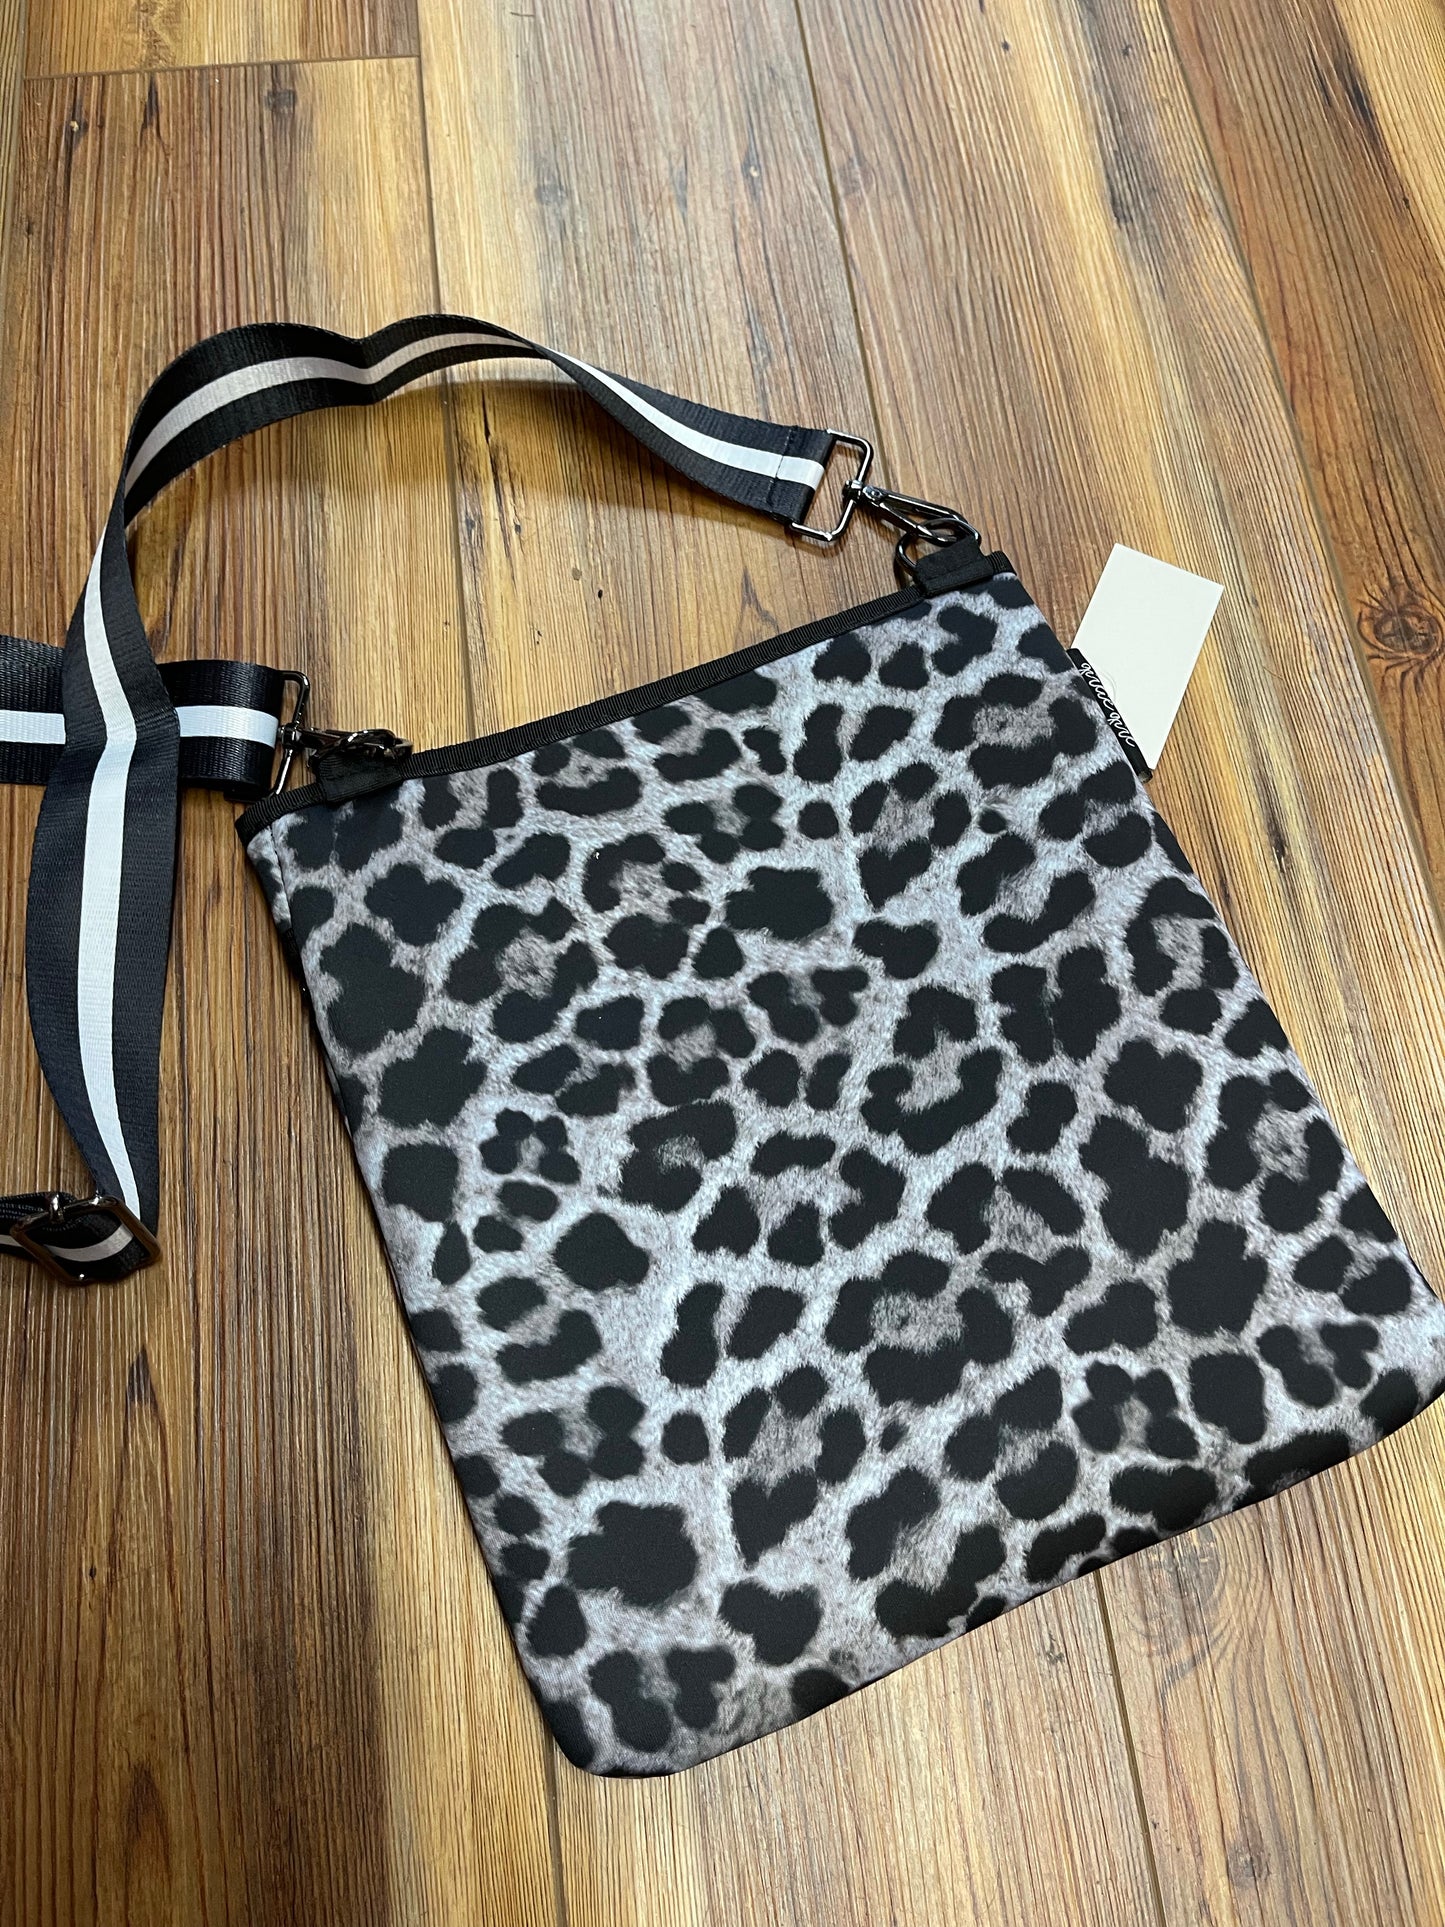 Neoprene Crossbody Bag - Black Leopard